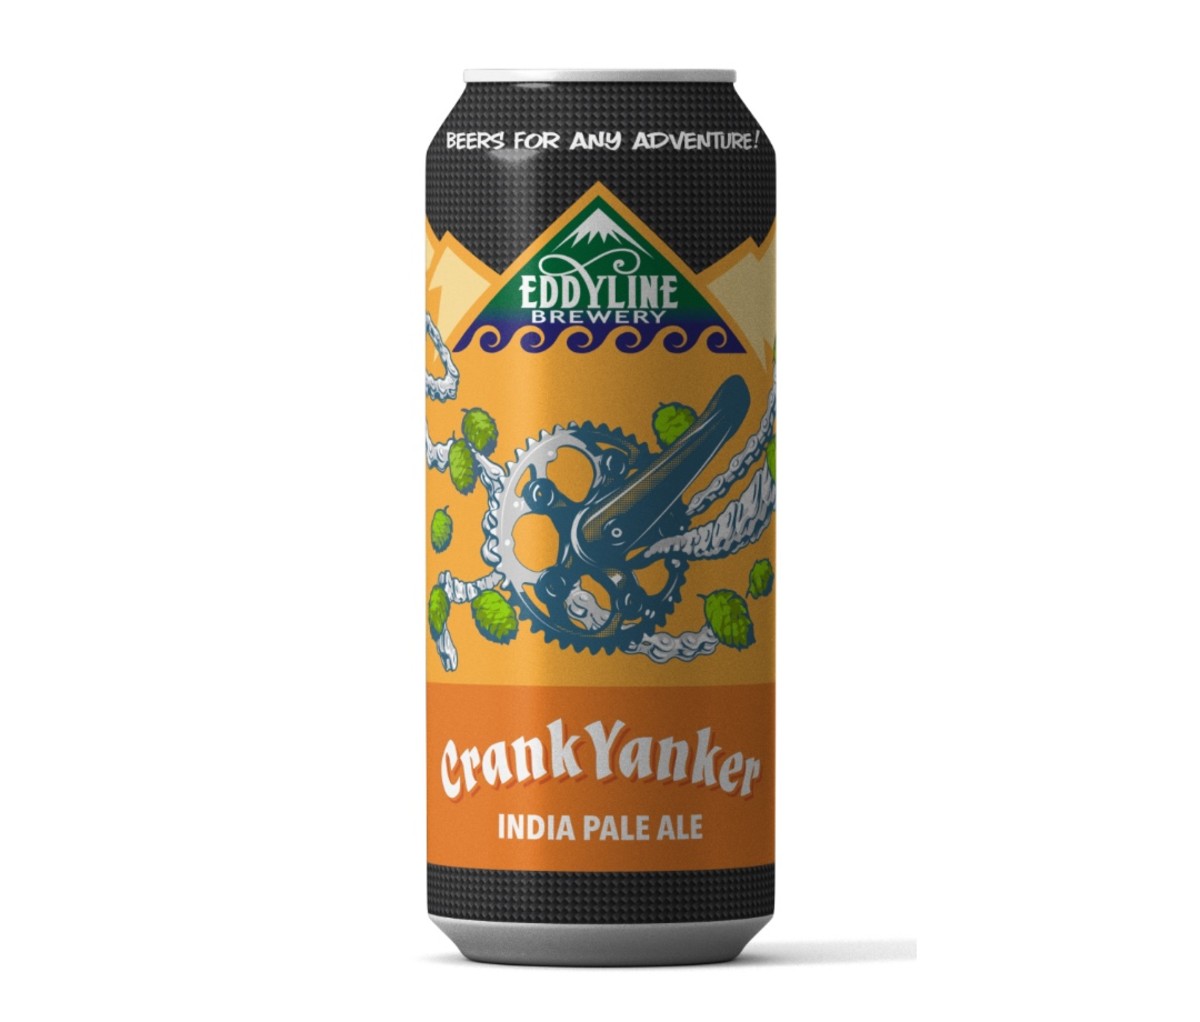 Eddyline Crank Yanker beer